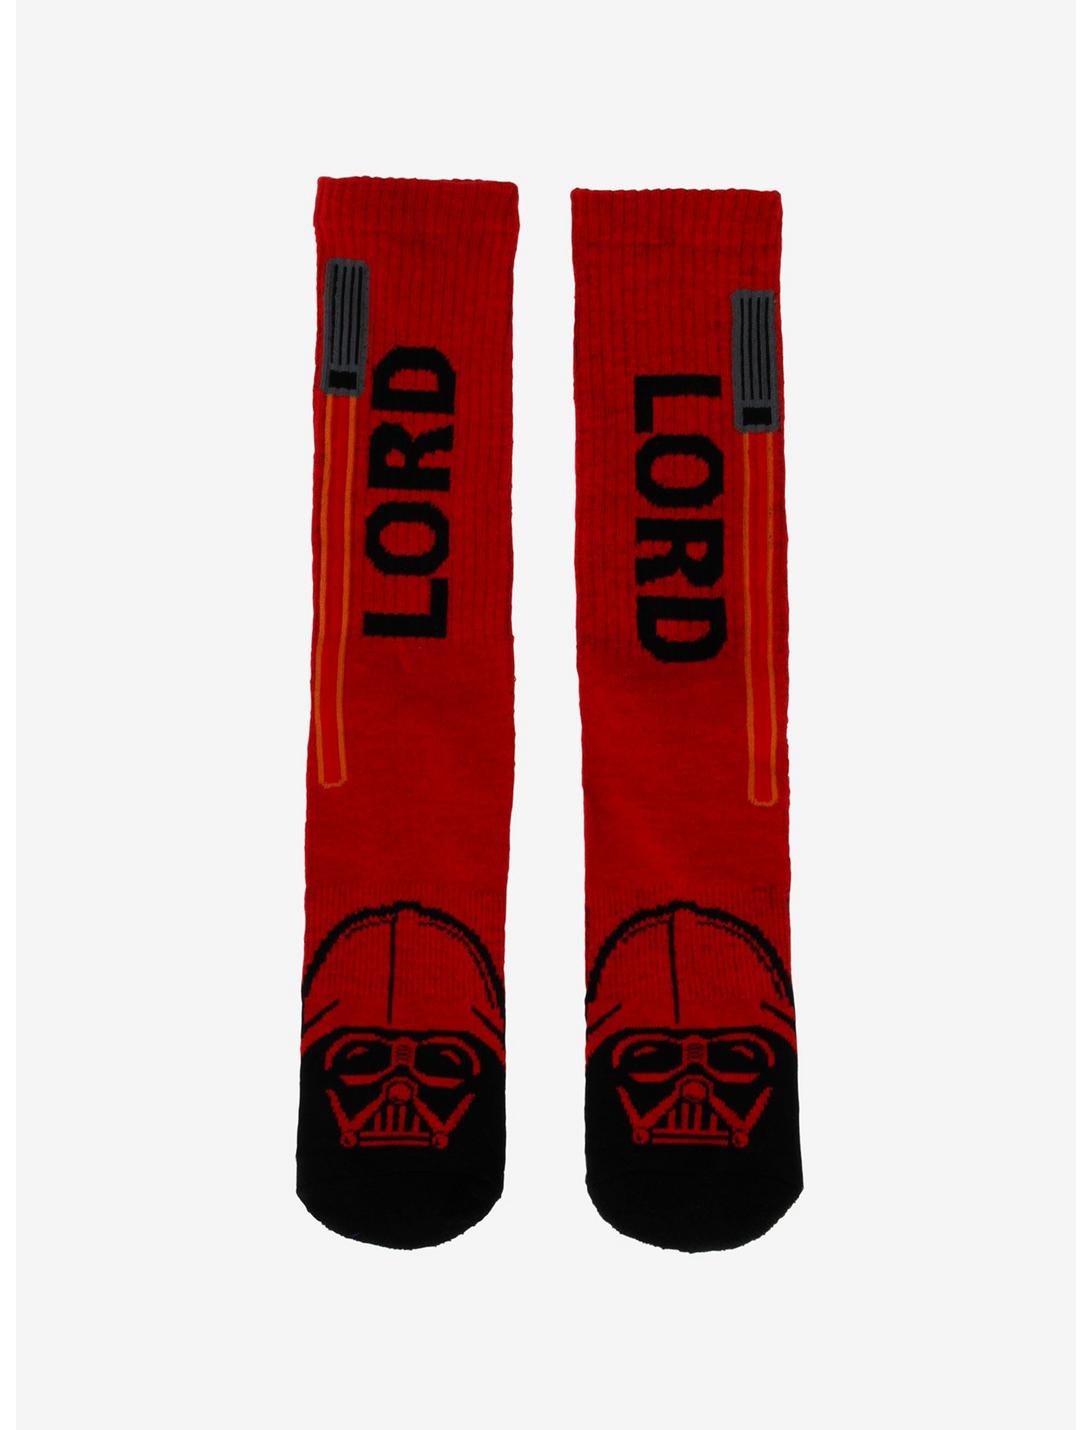 Star Wars Sith Lord Crew Socks, , hi-res